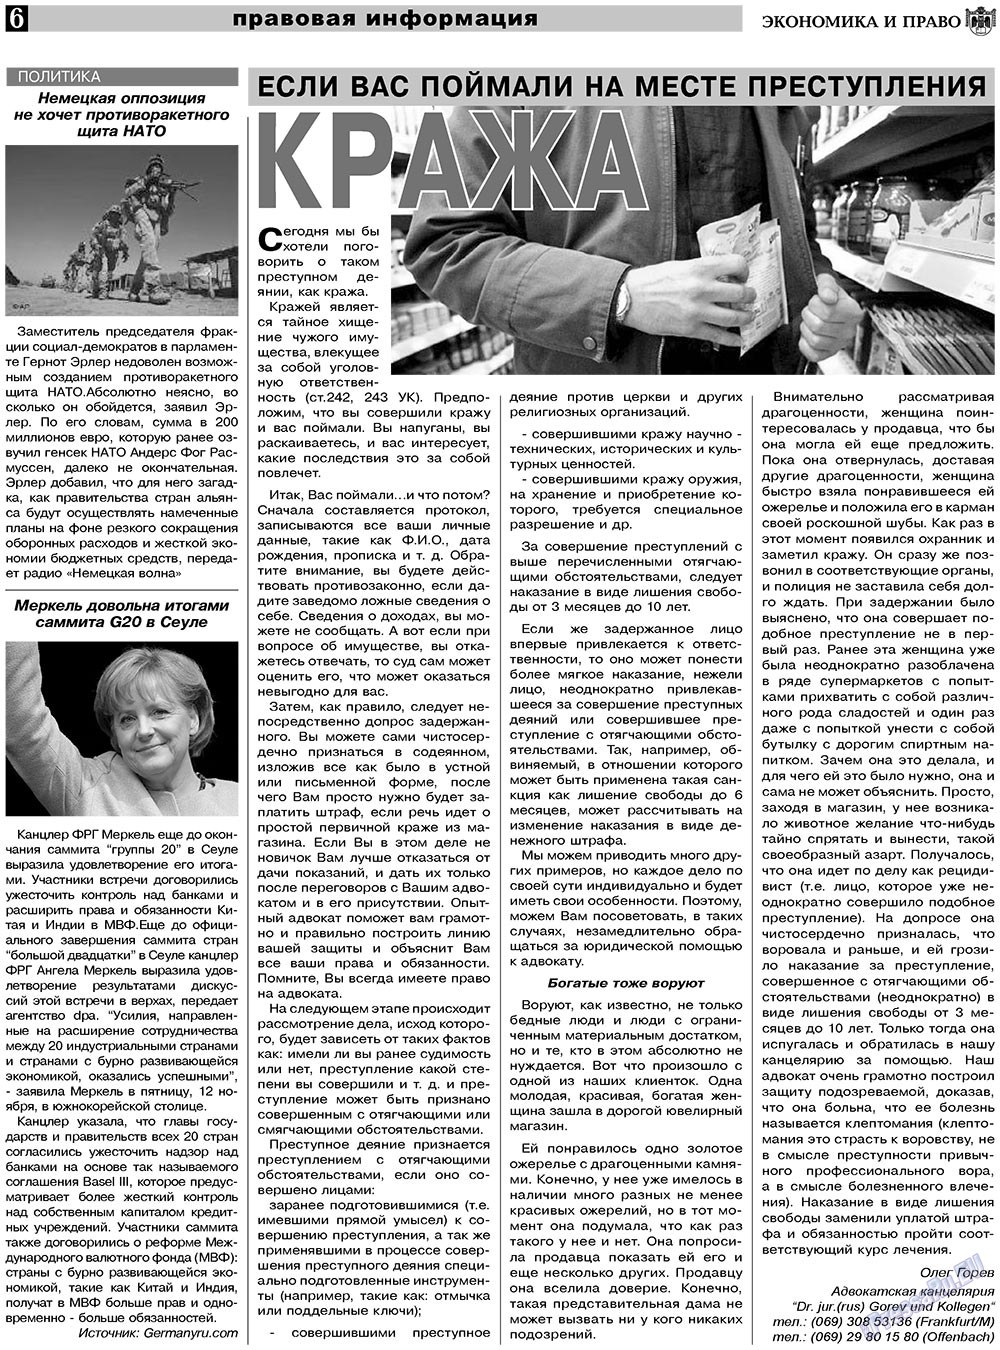 Ekonomika i pravo (Zeitung). 2010 Jahr, Ausgabe 12, Seite 6